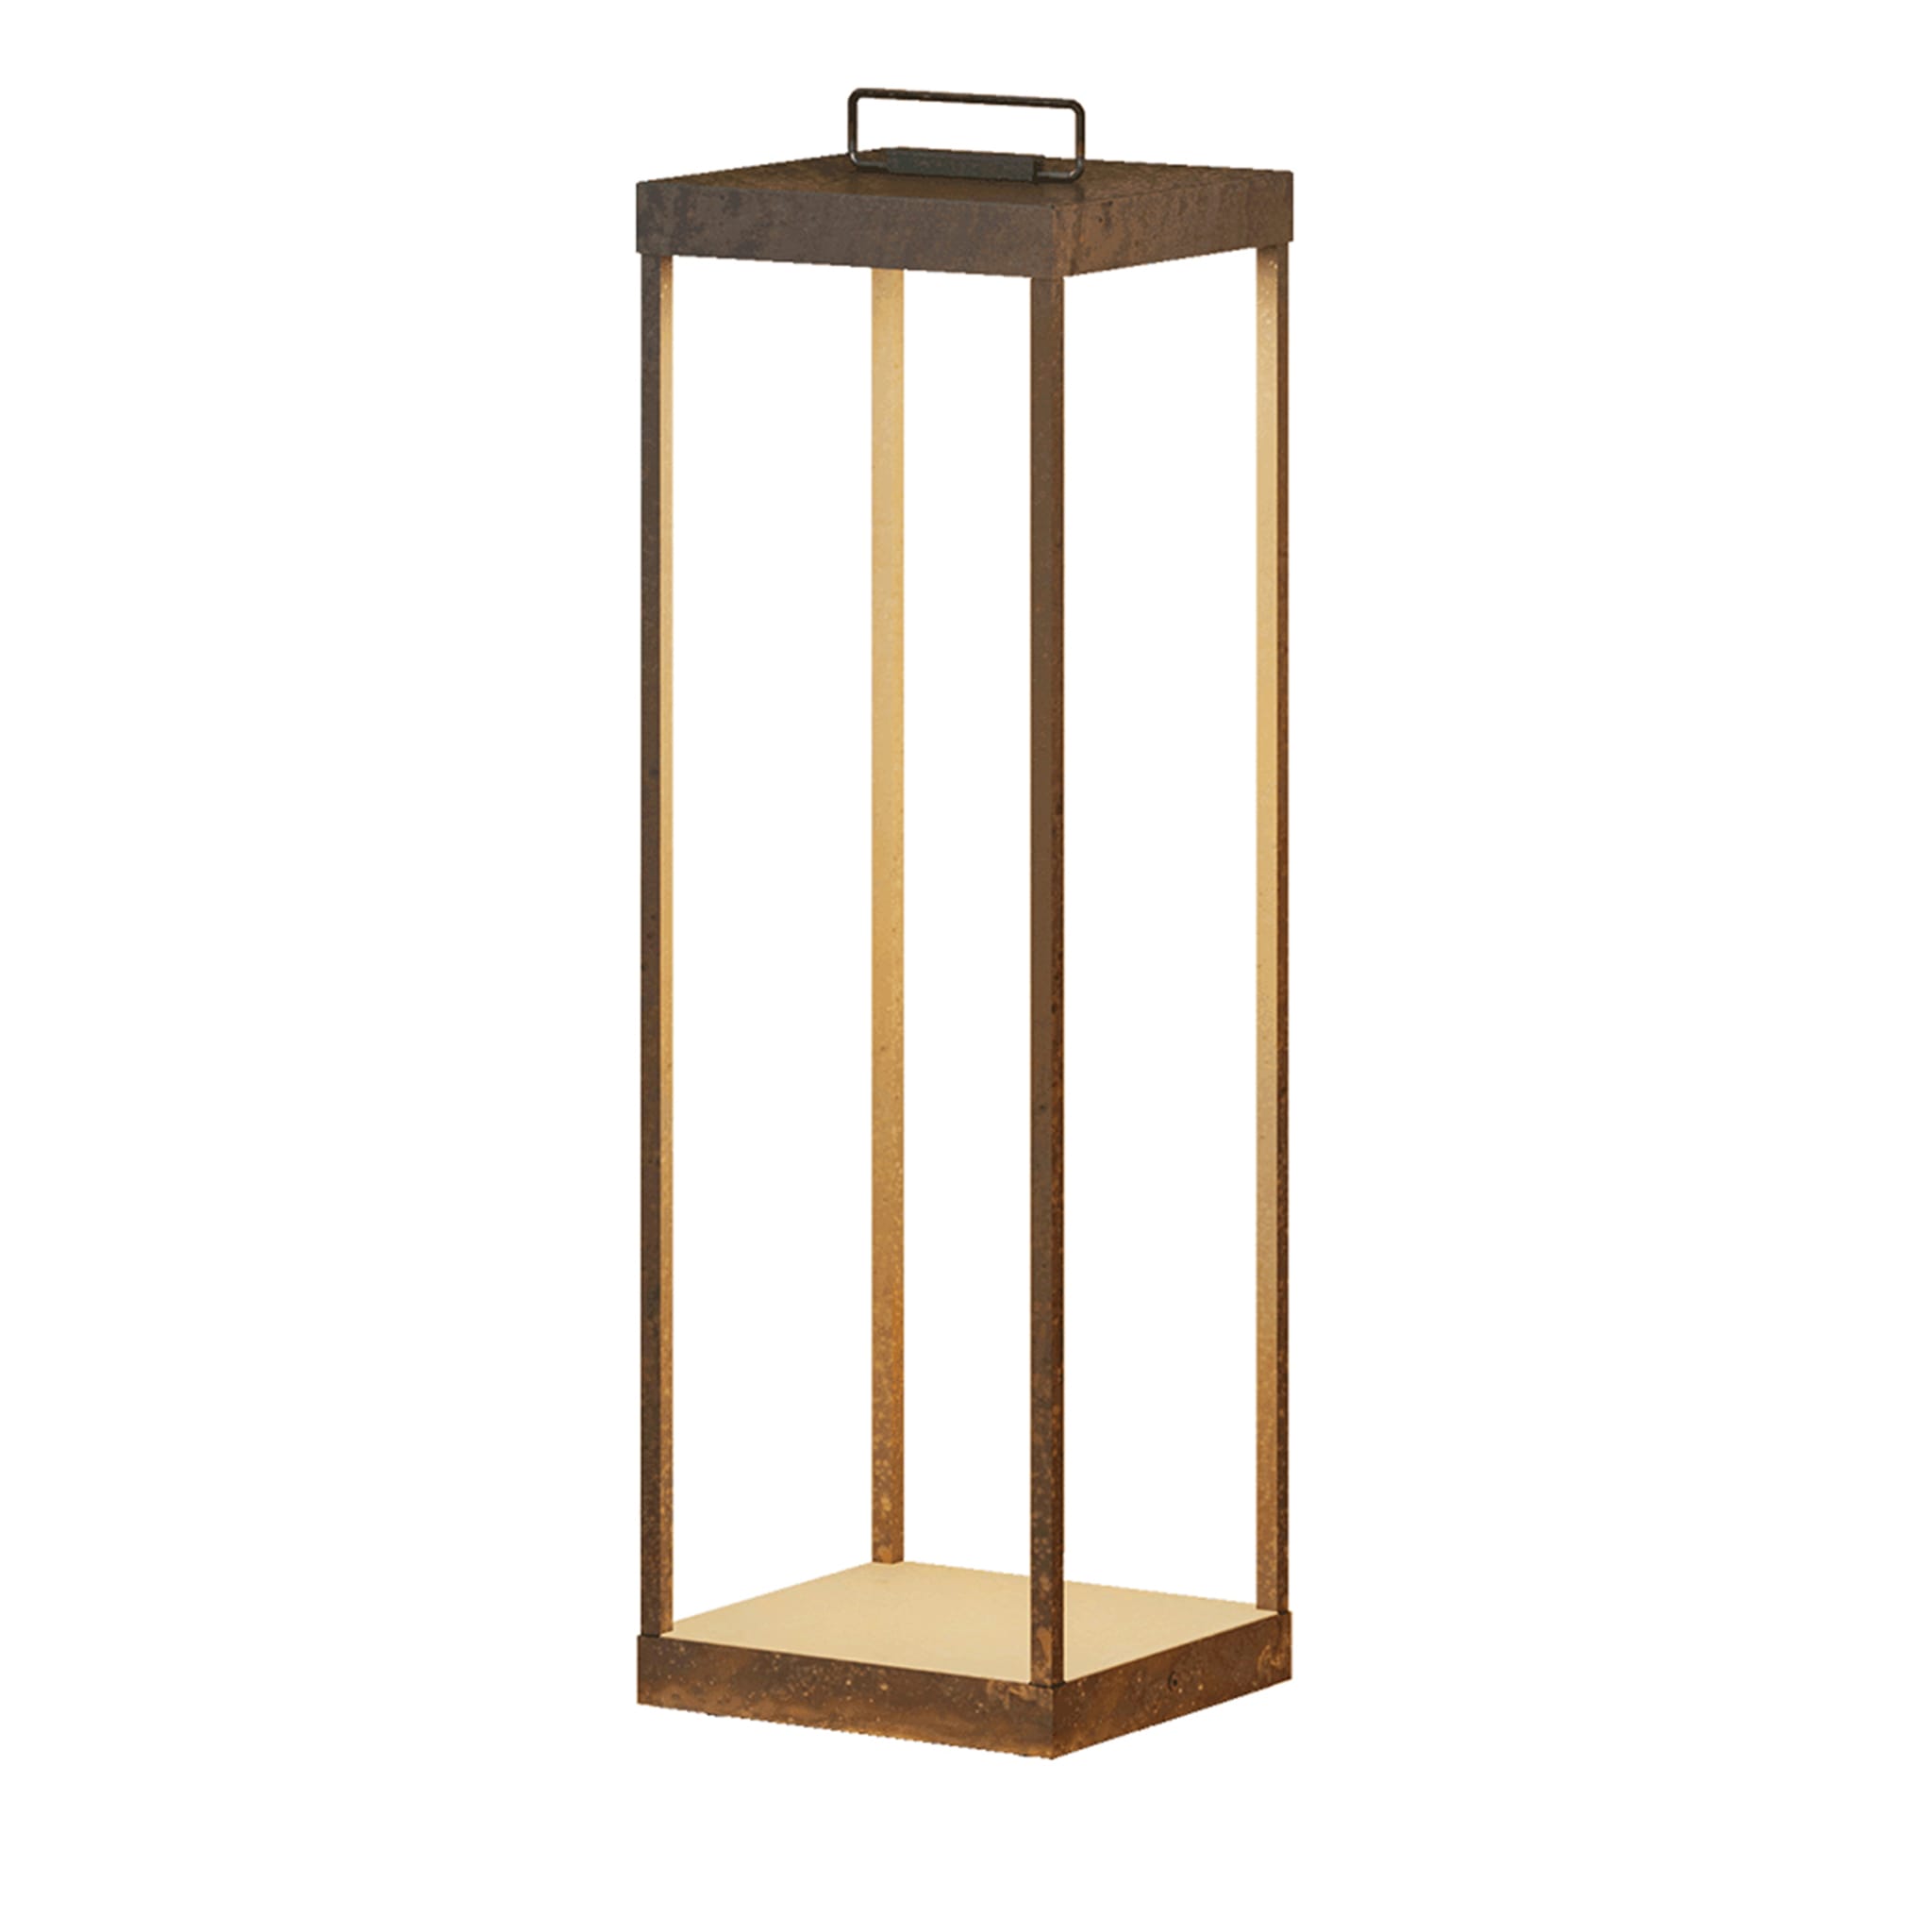 Lanterne Slim Tall Outdoor Floor Lamp - Main view